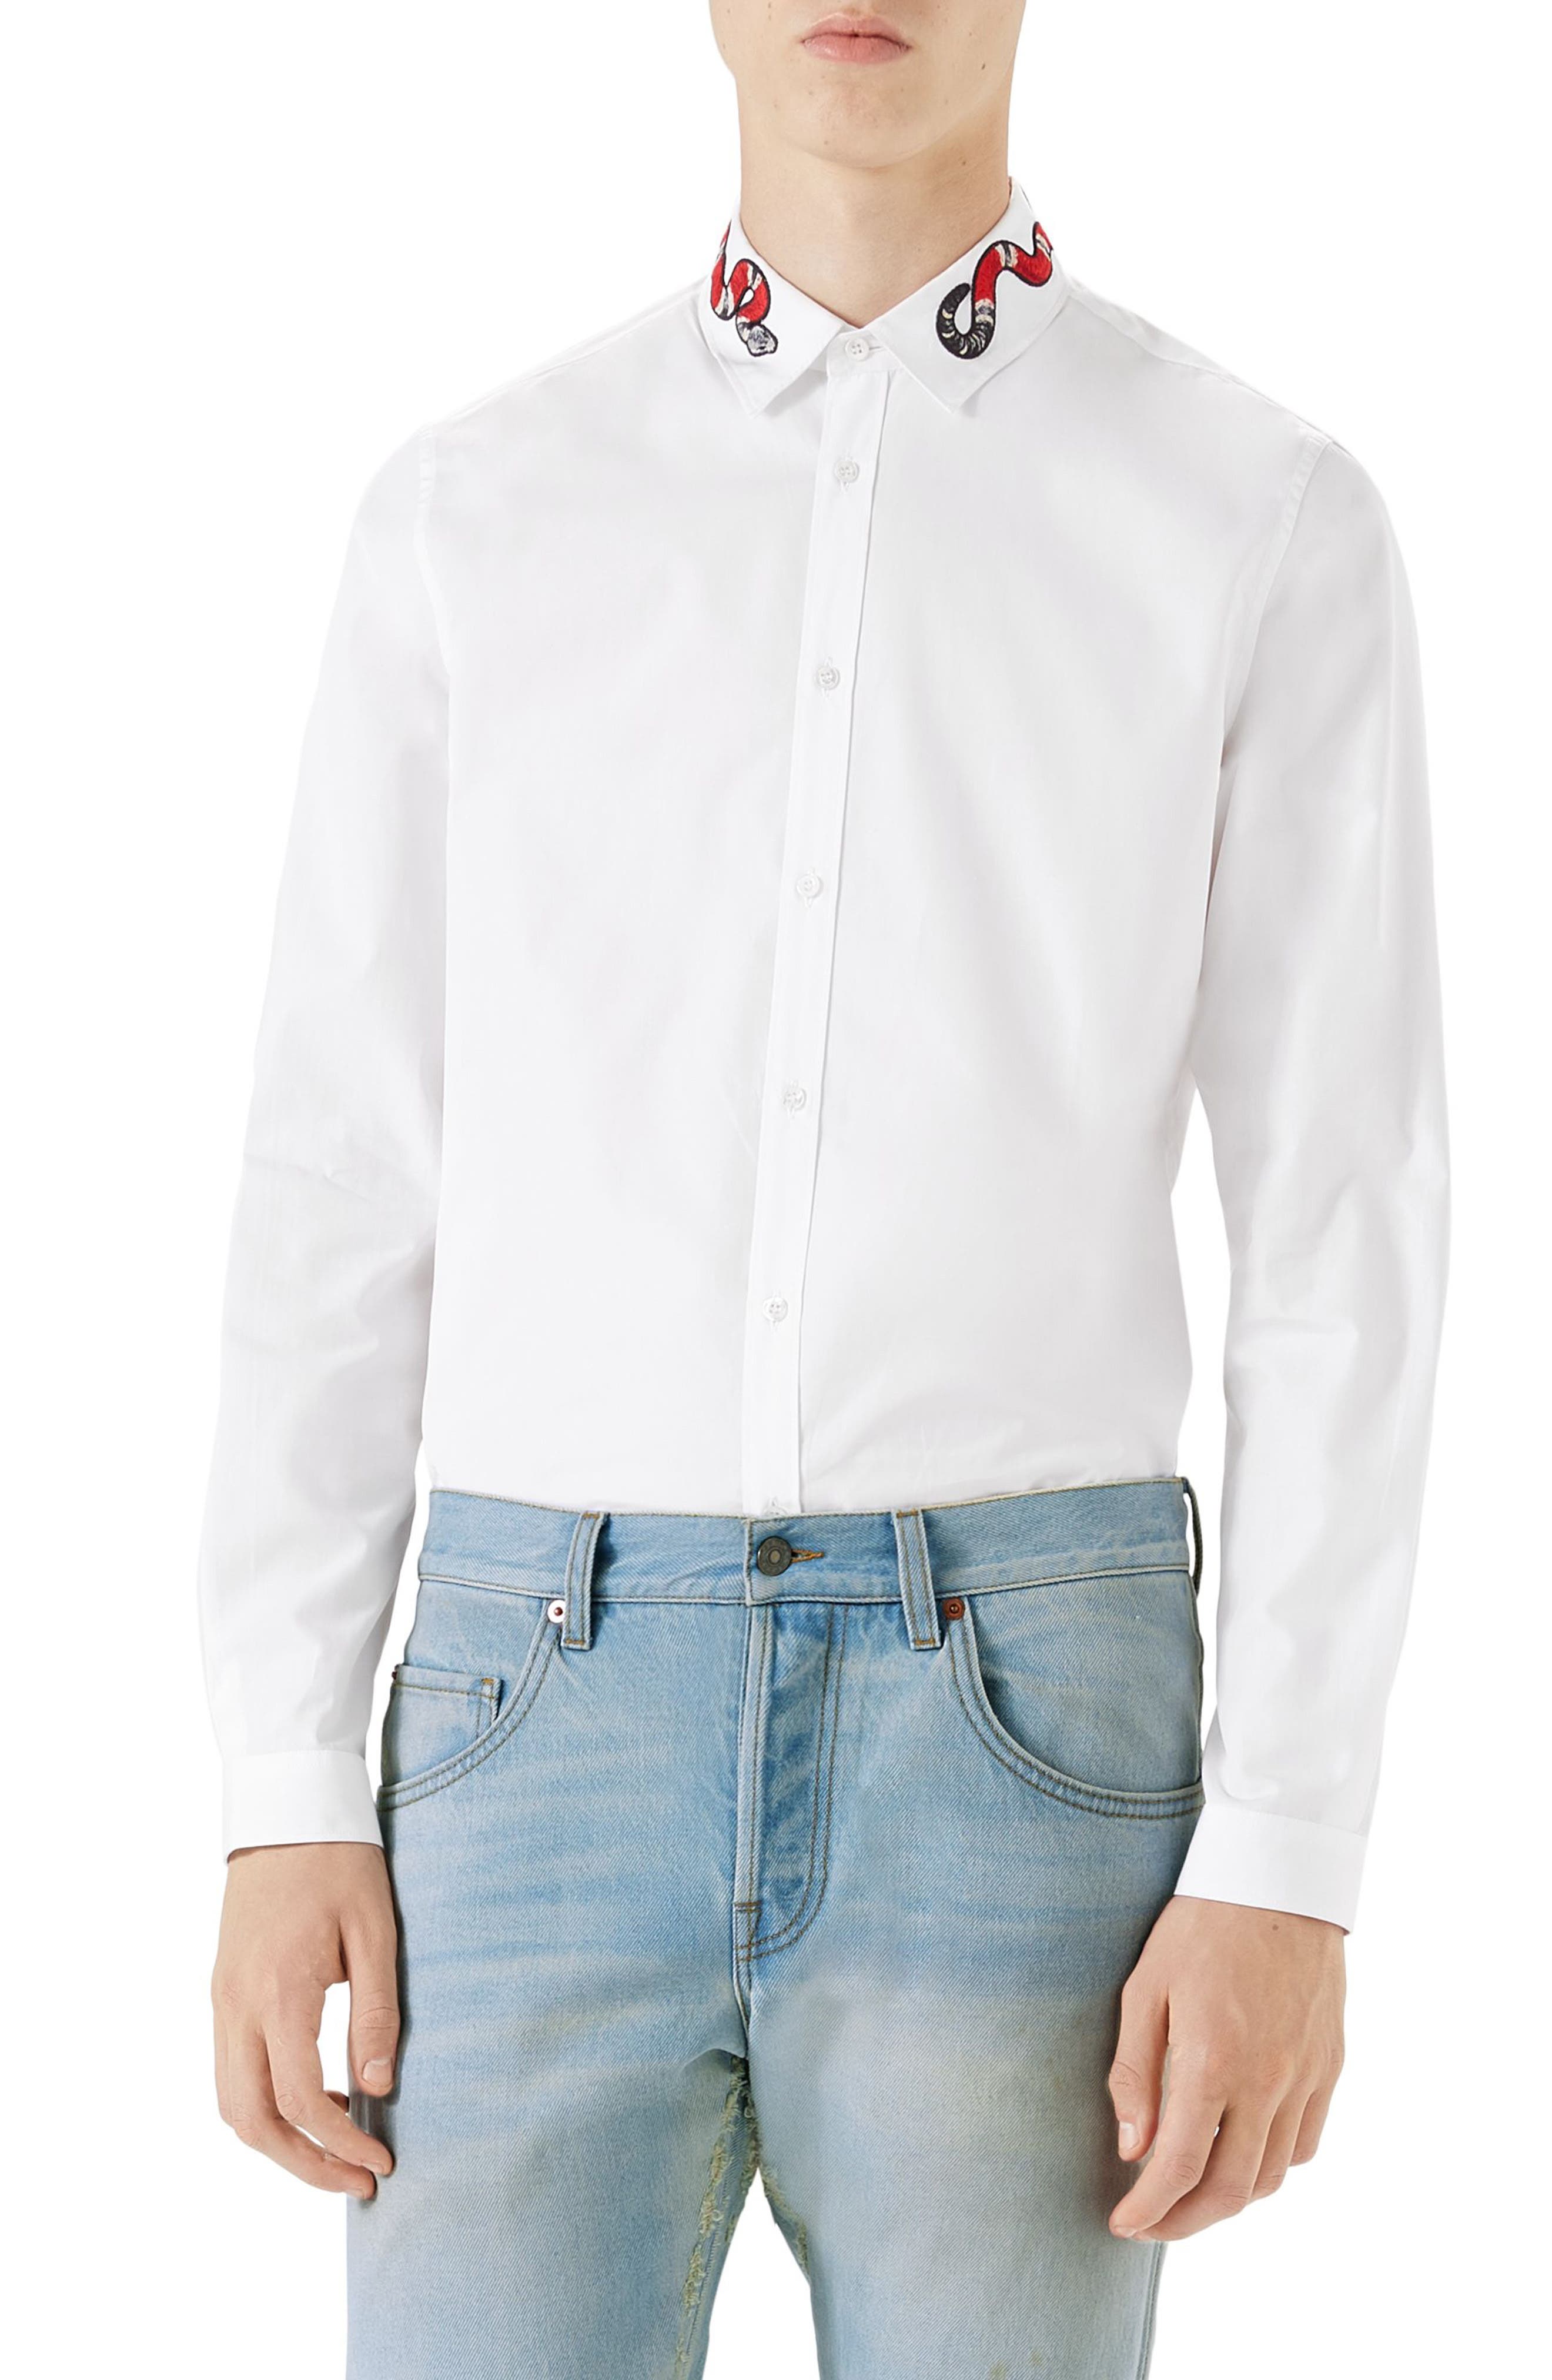 white gucci button up shirt